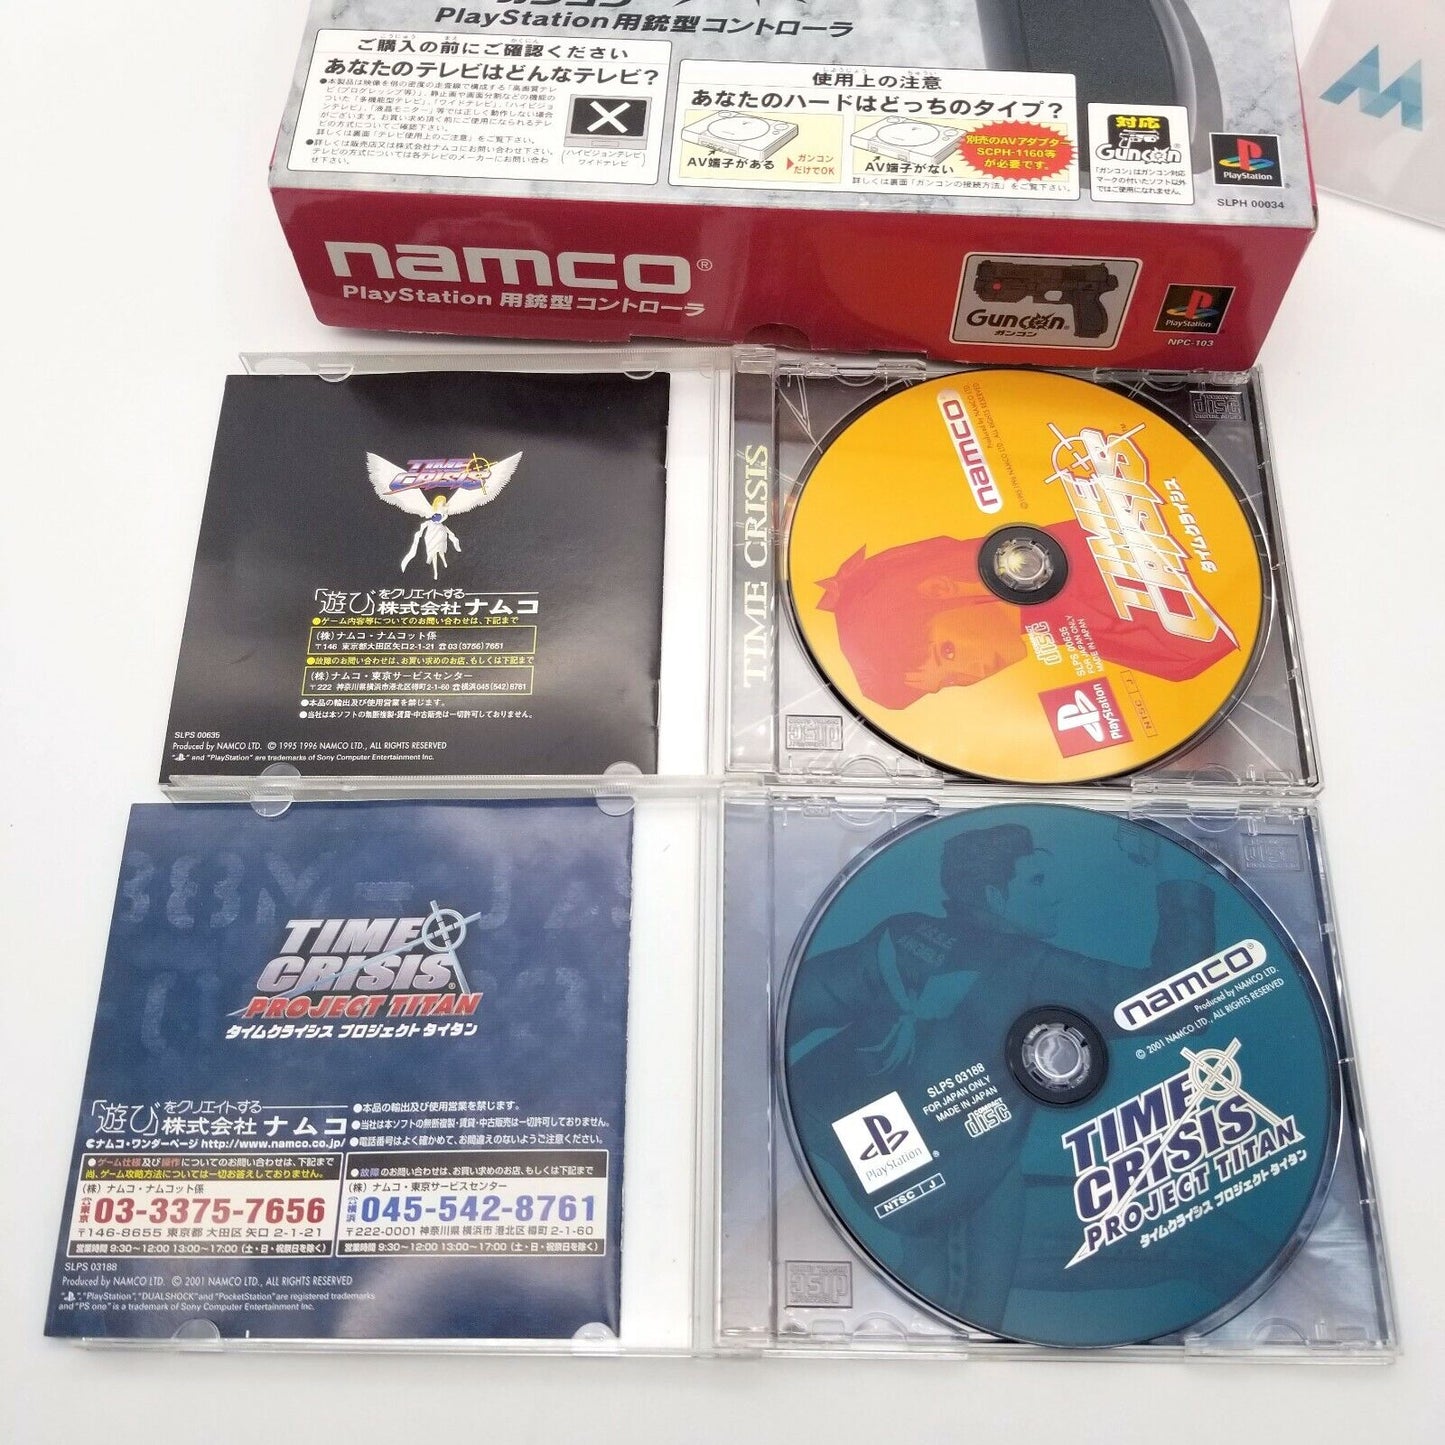 Guncon NPC-103 Black PS1 PlayStation 1 w/ Time Crisis , Project Titan Japanese